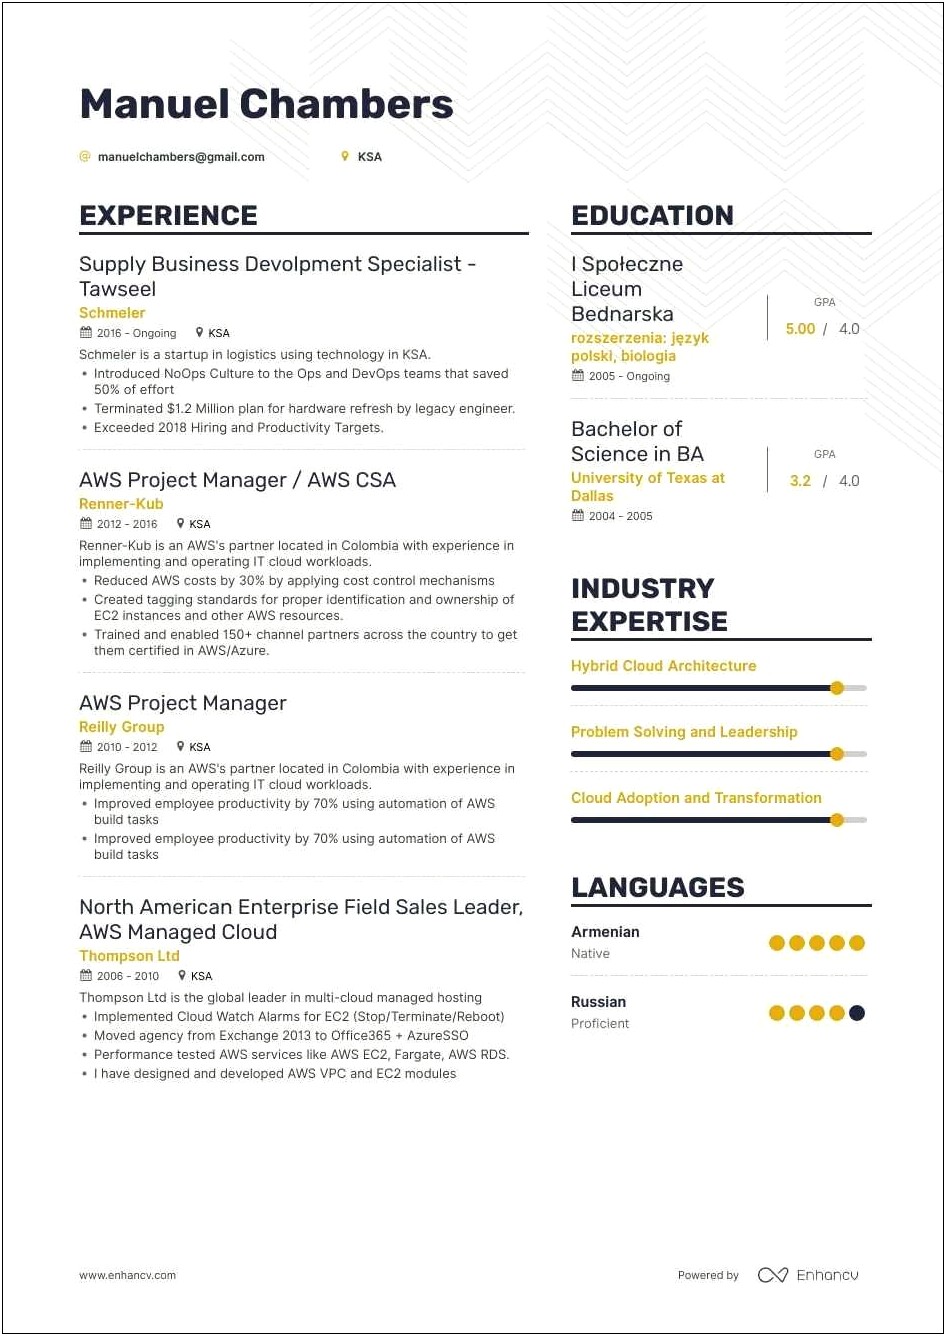 Csa Job Description For Resume